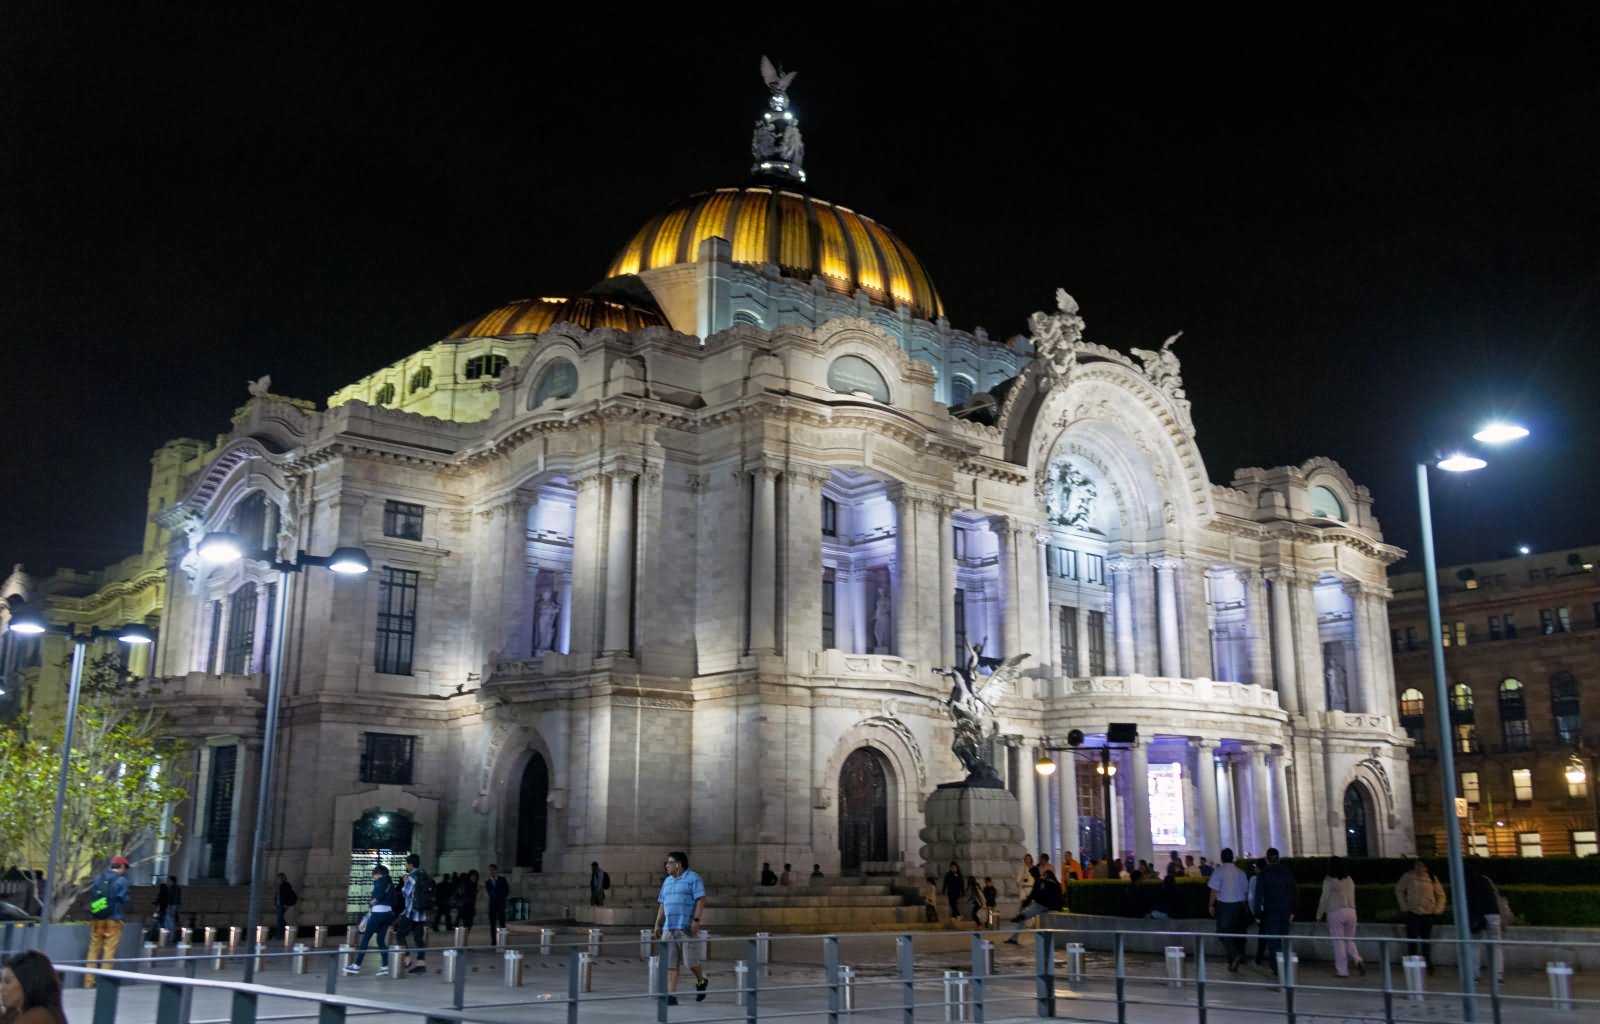 Beautiful Side Picture Of The Palacio de Bellas Artes At Night